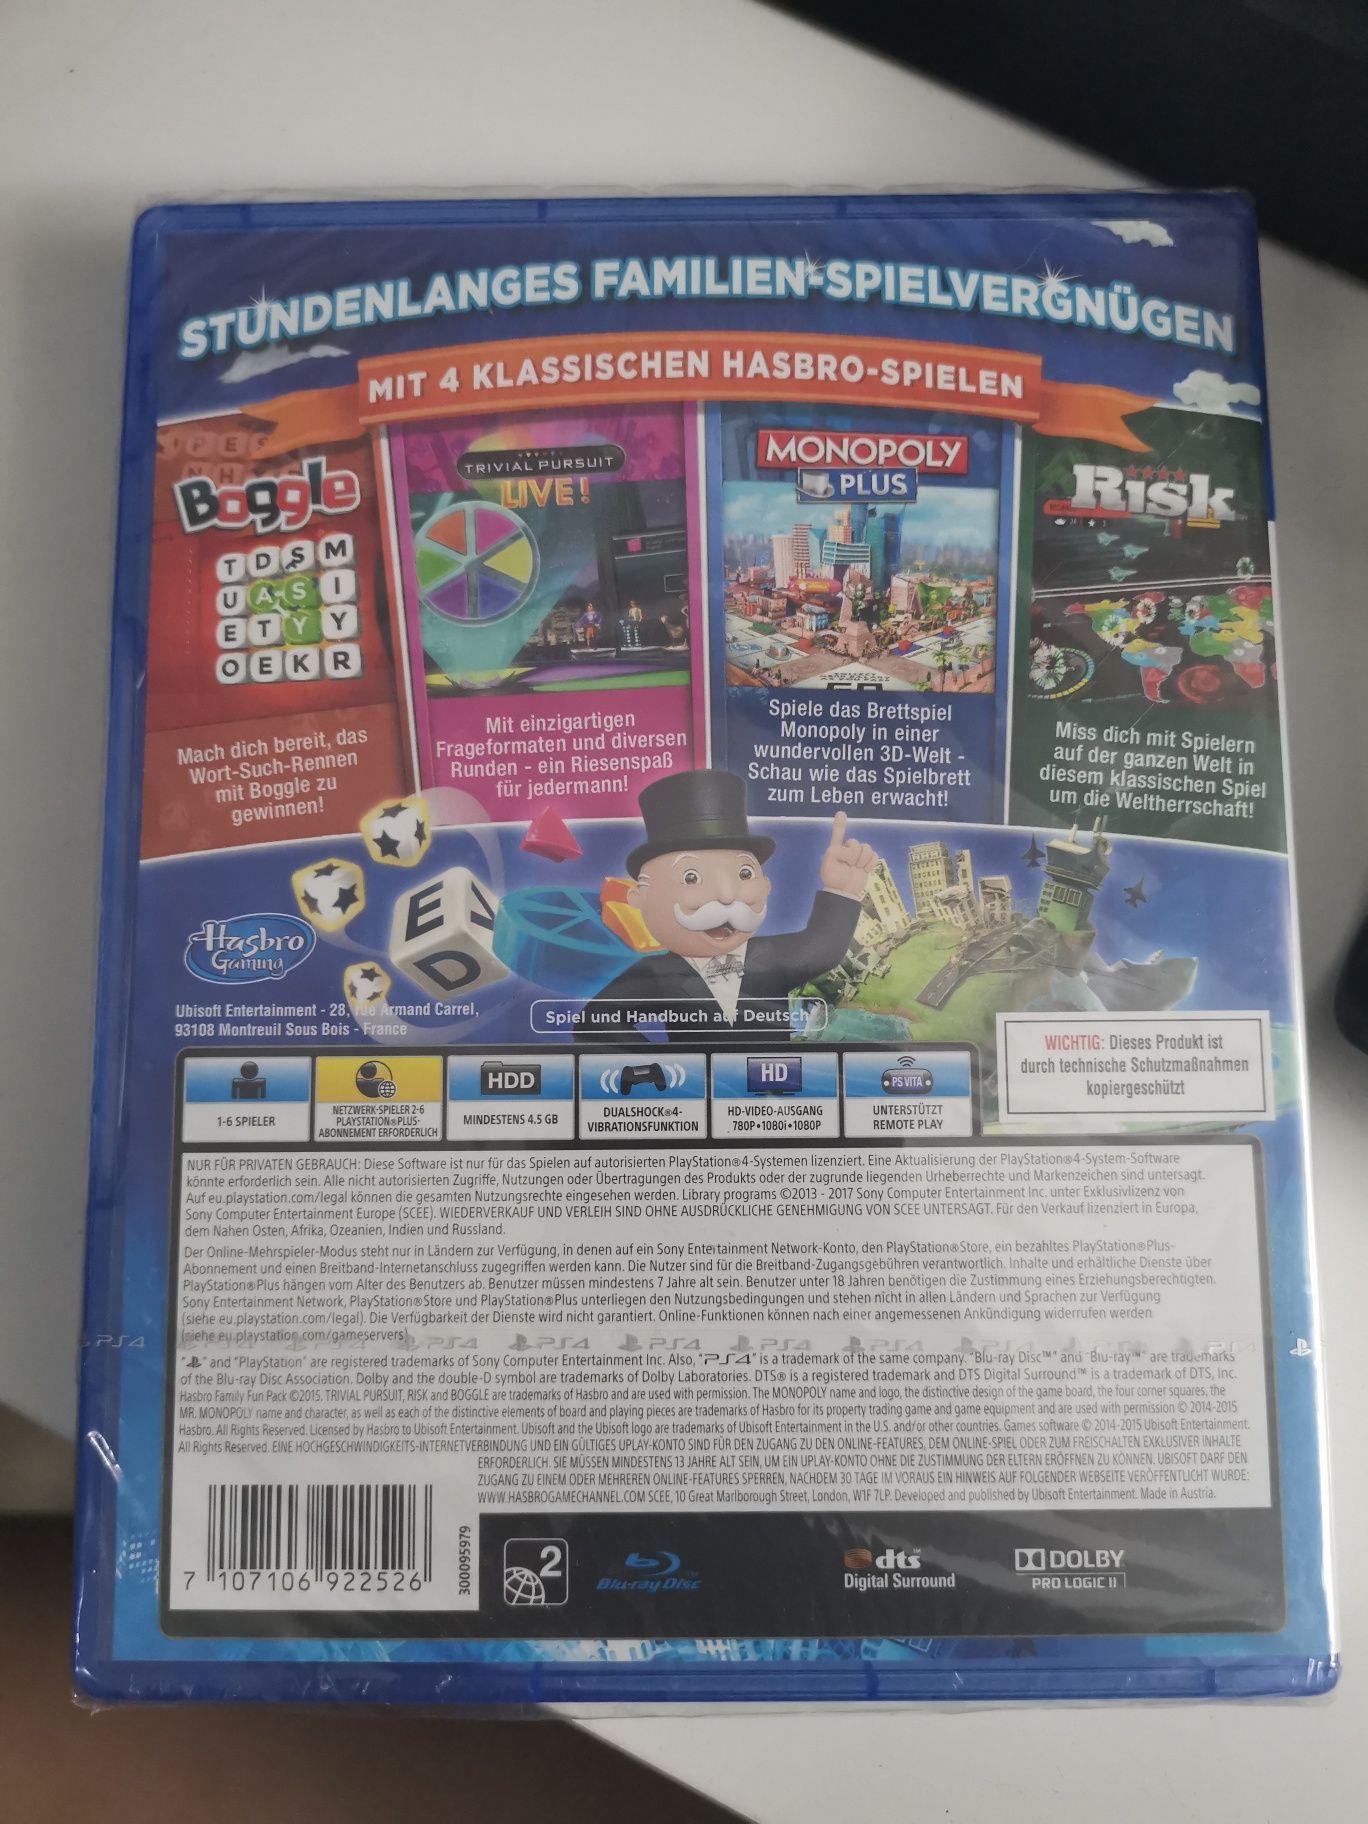 Hasbro Family Fun Pack - 4 Games in 1 - Ps4